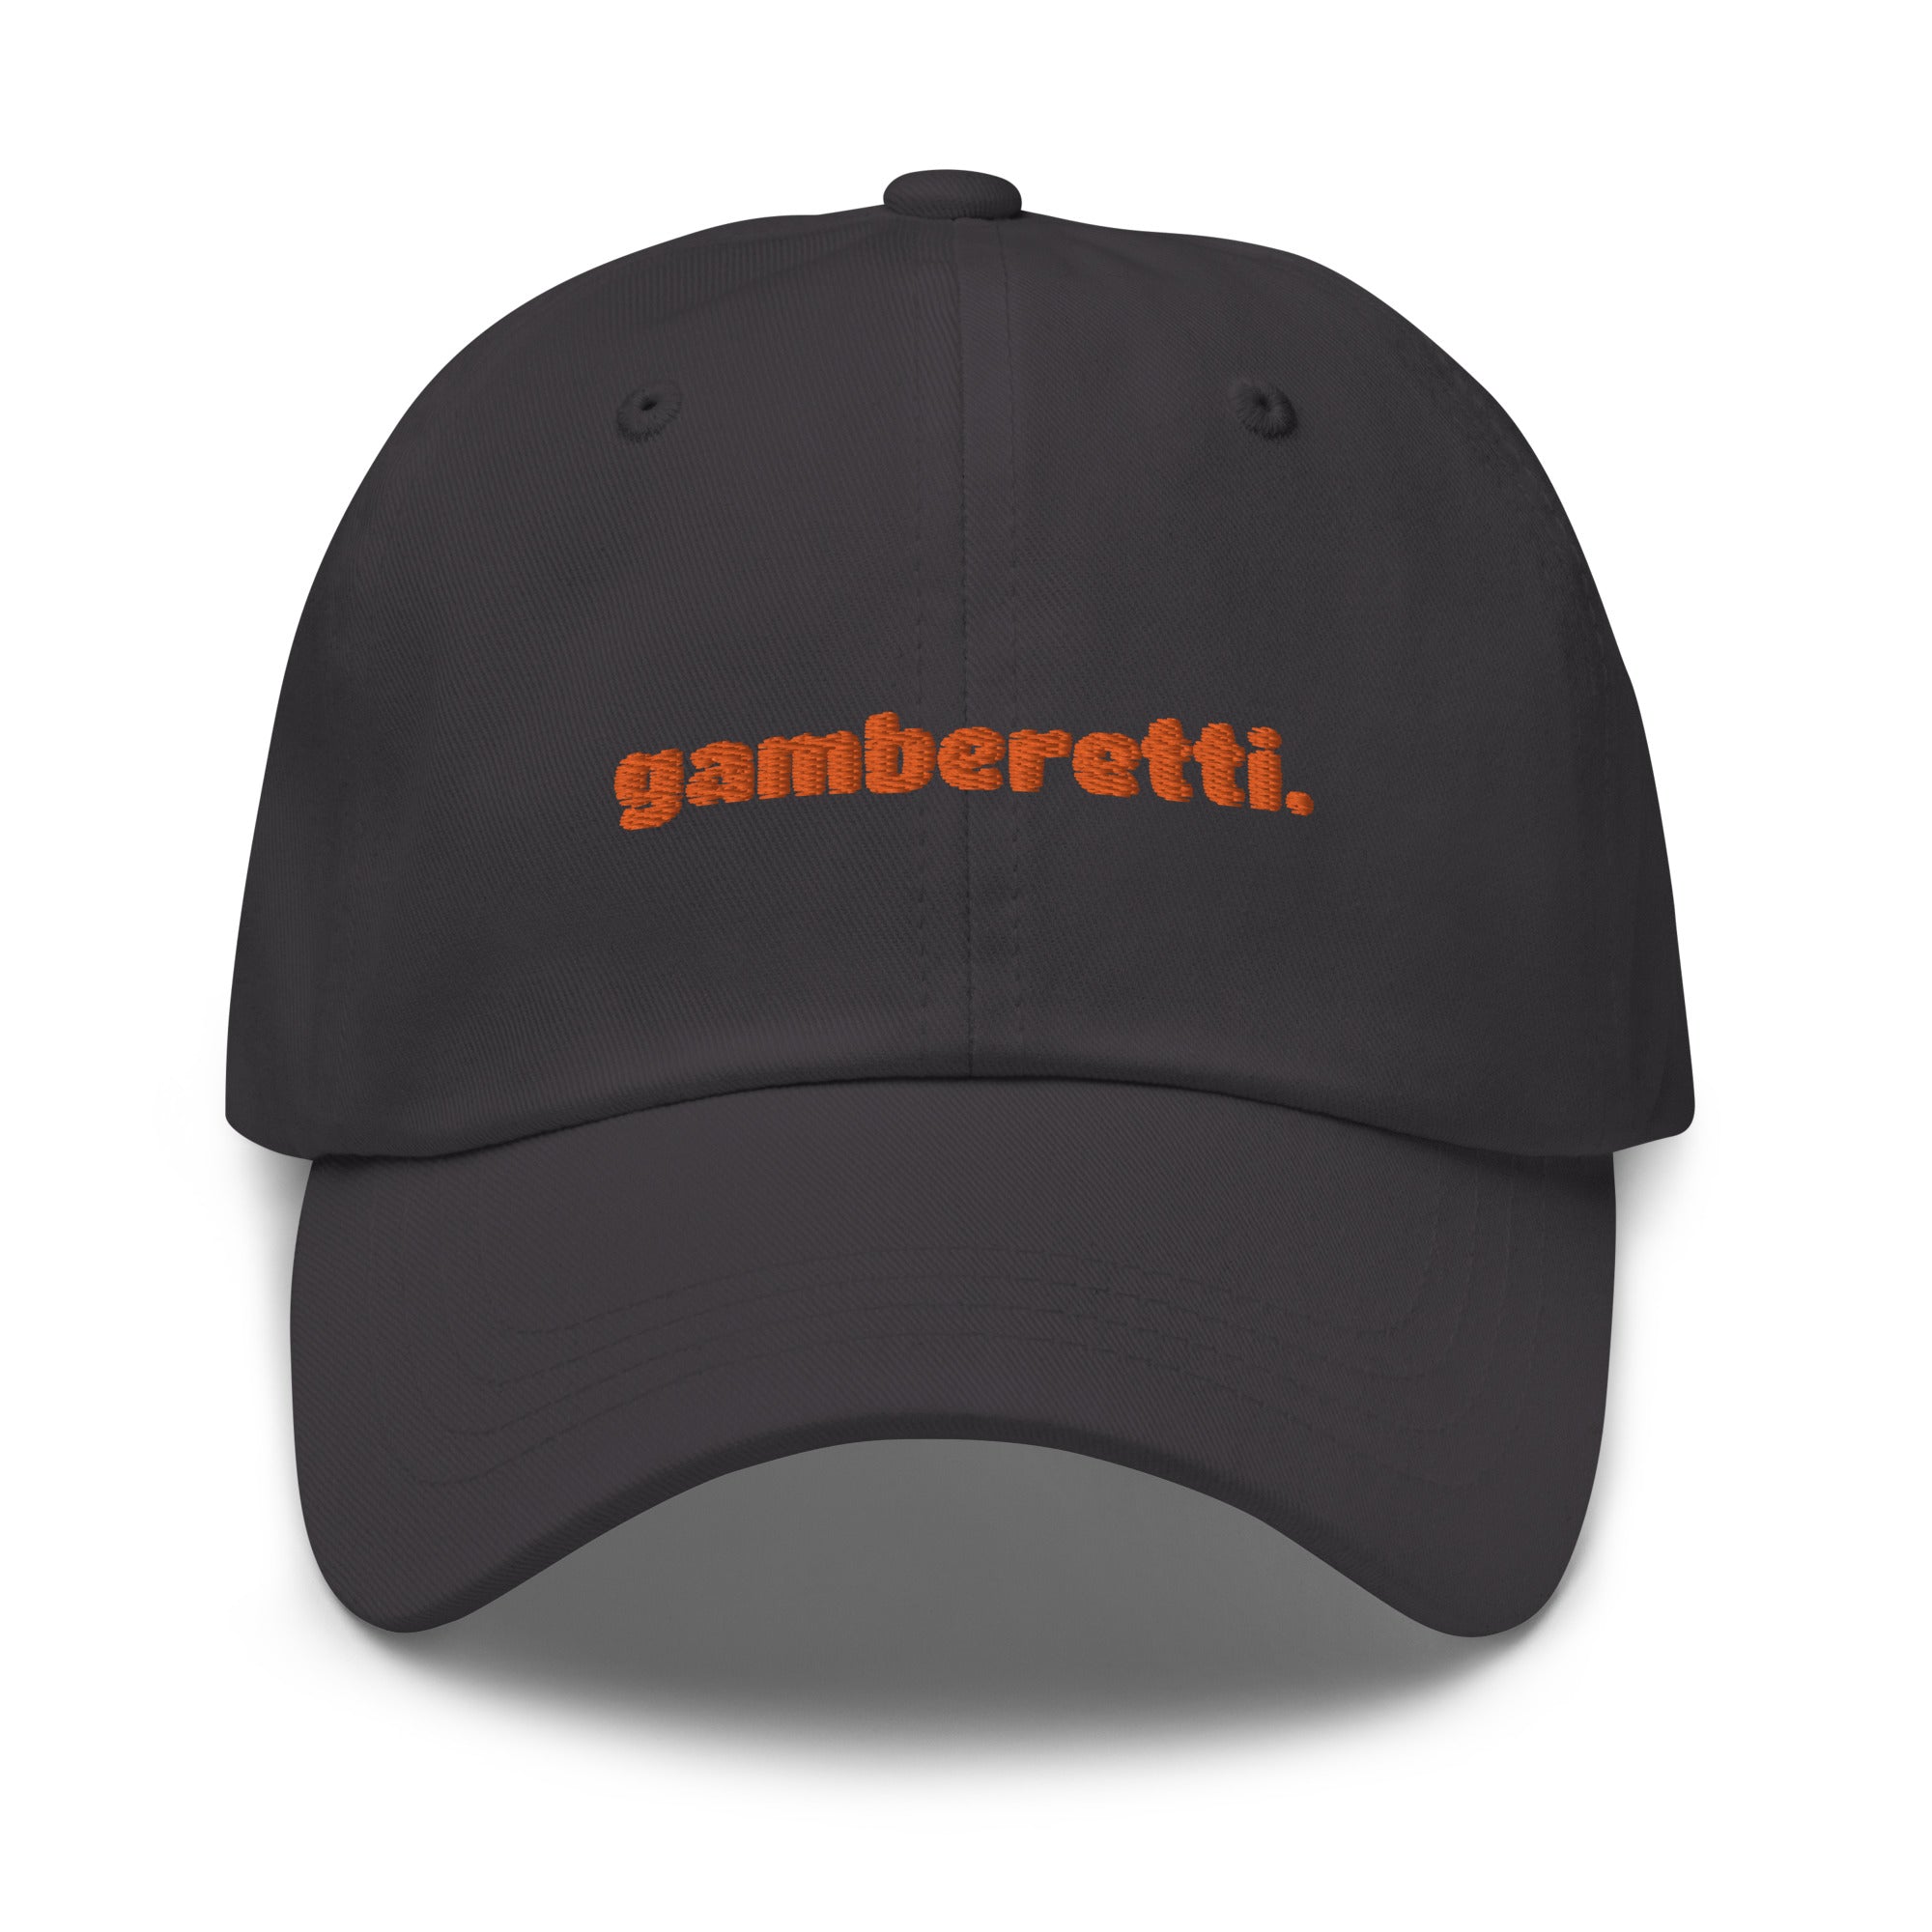 Gamberetti - Dad hat